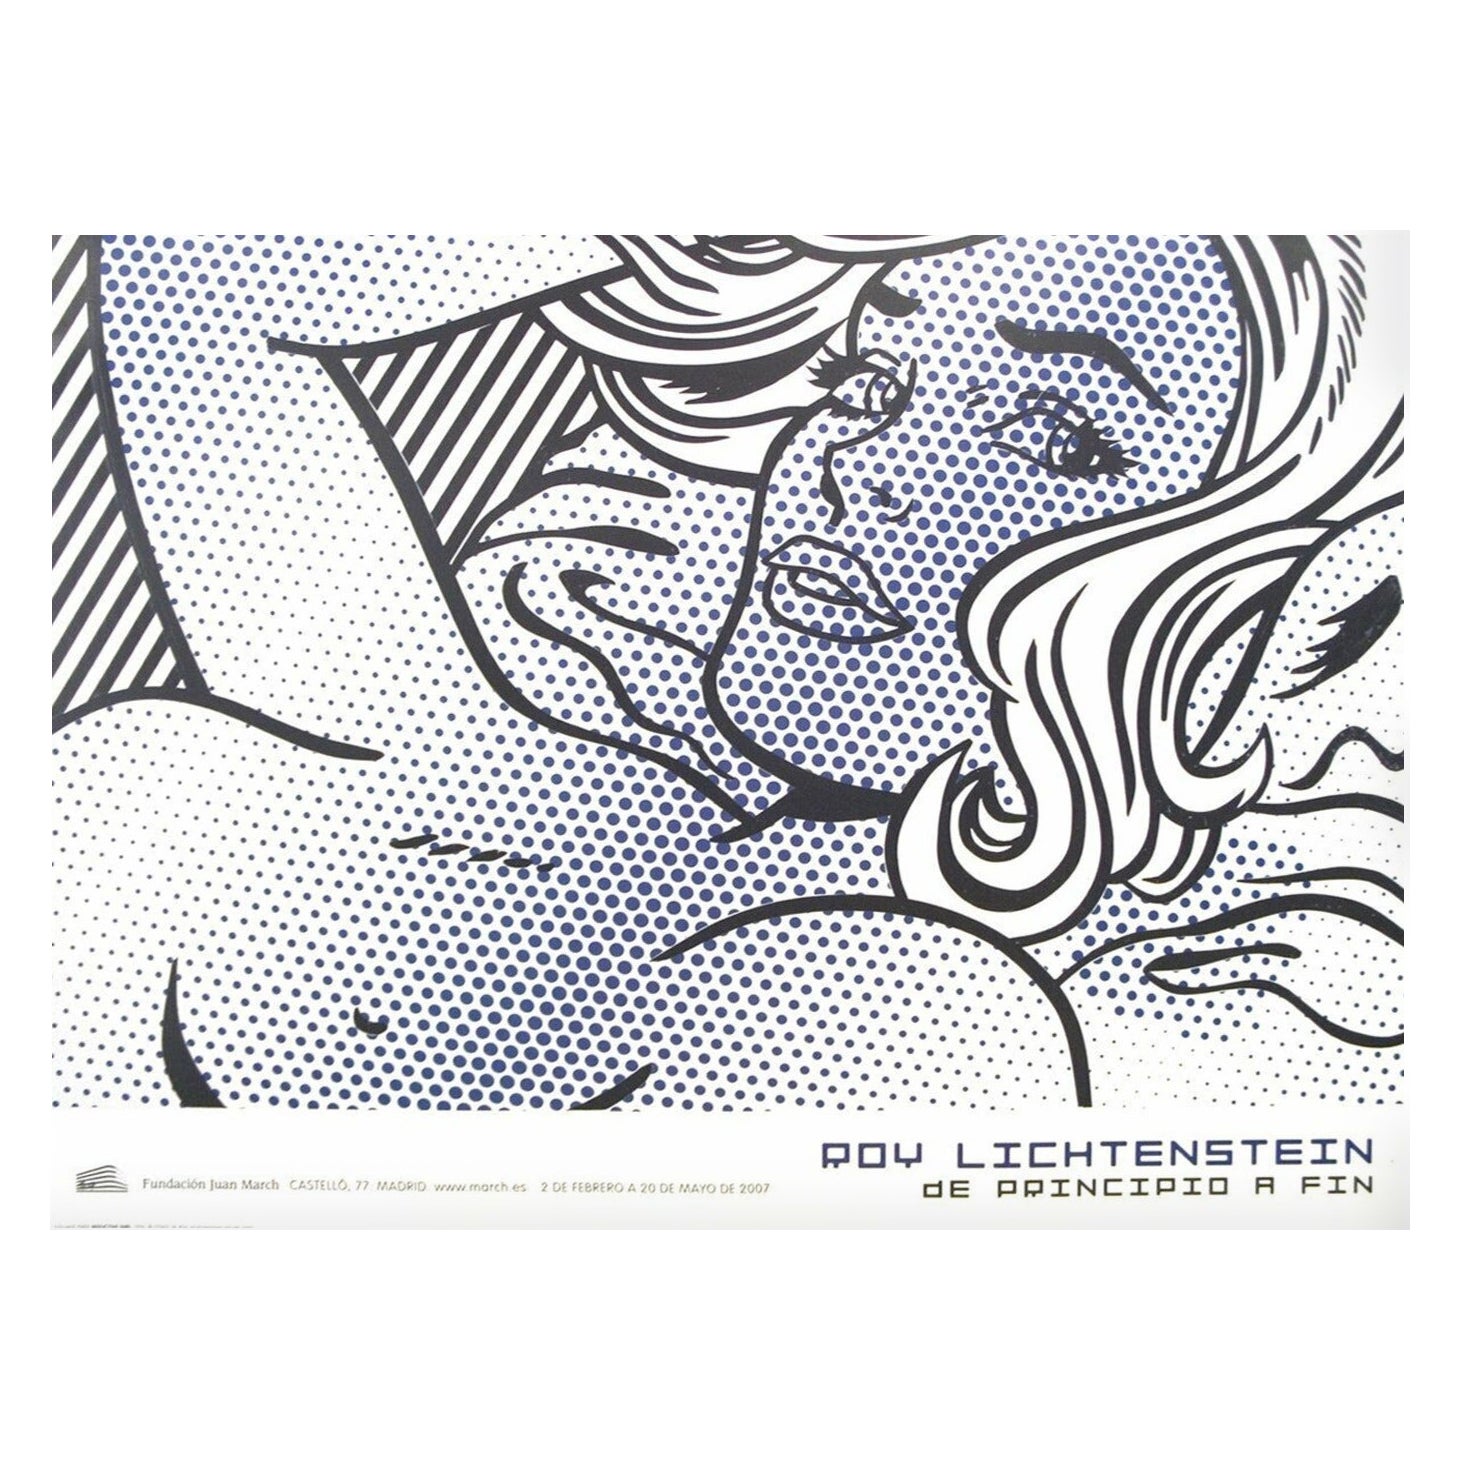 2007 Roy Lichtenstein - Seductive Girl - Fundacion Juan March Original Poster For Sale